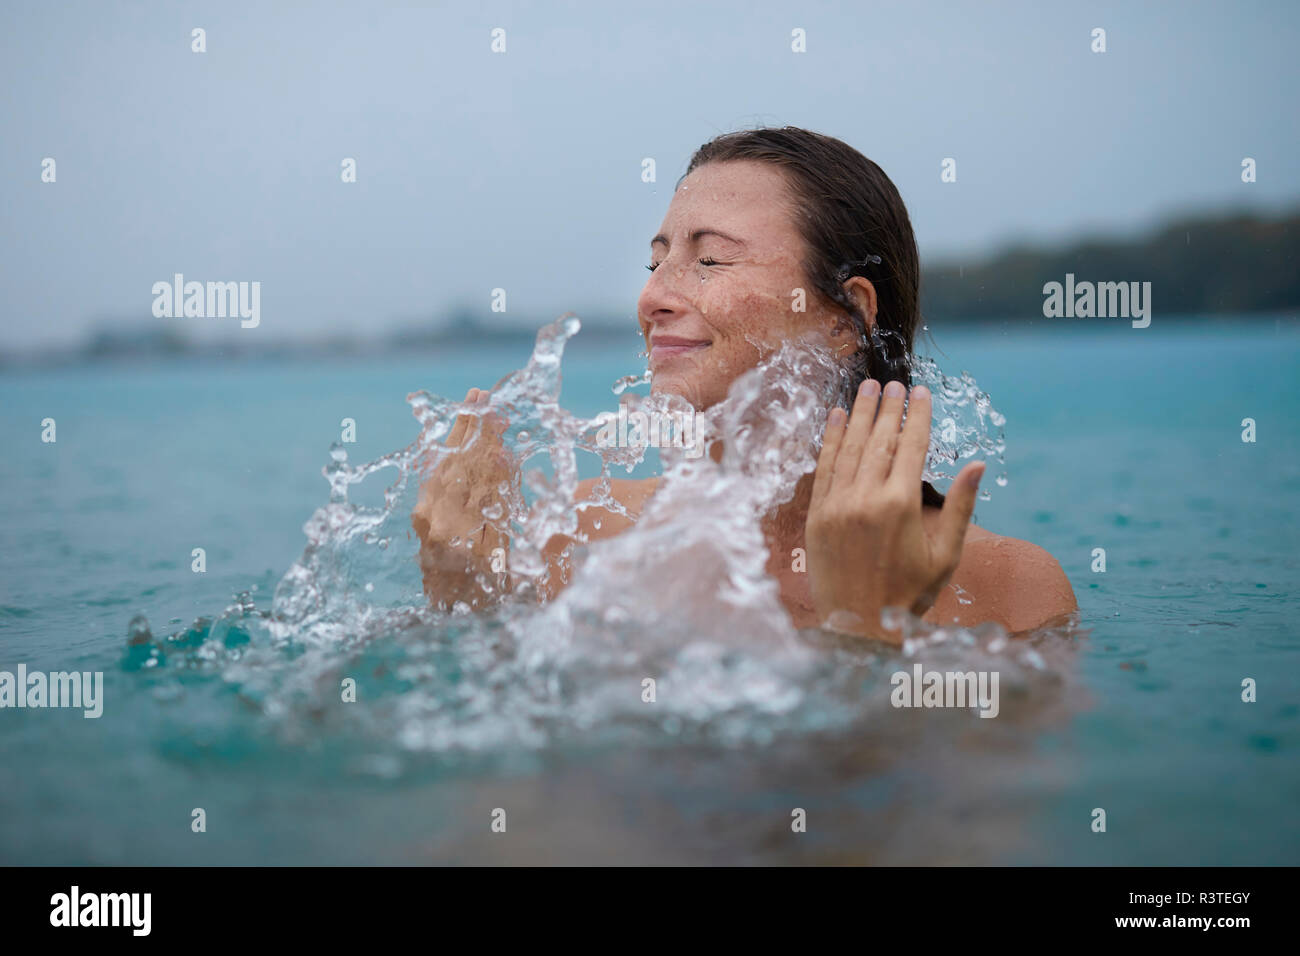 Young woman bathing in lake splashing with water Stock Photo